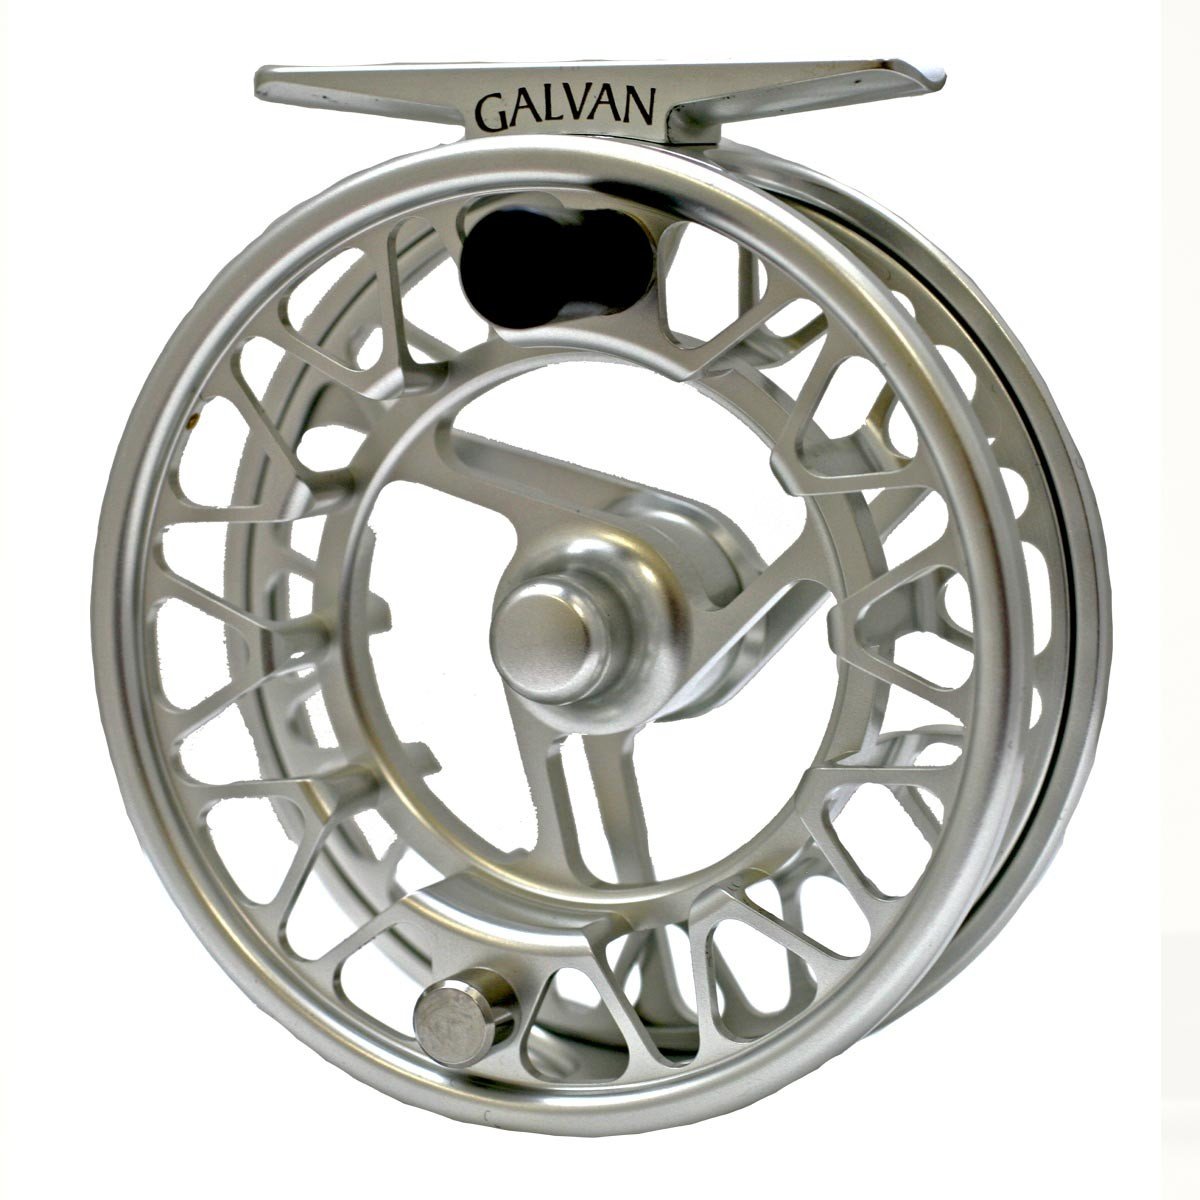 Galvan Brookie Spare Spool - Made in USA